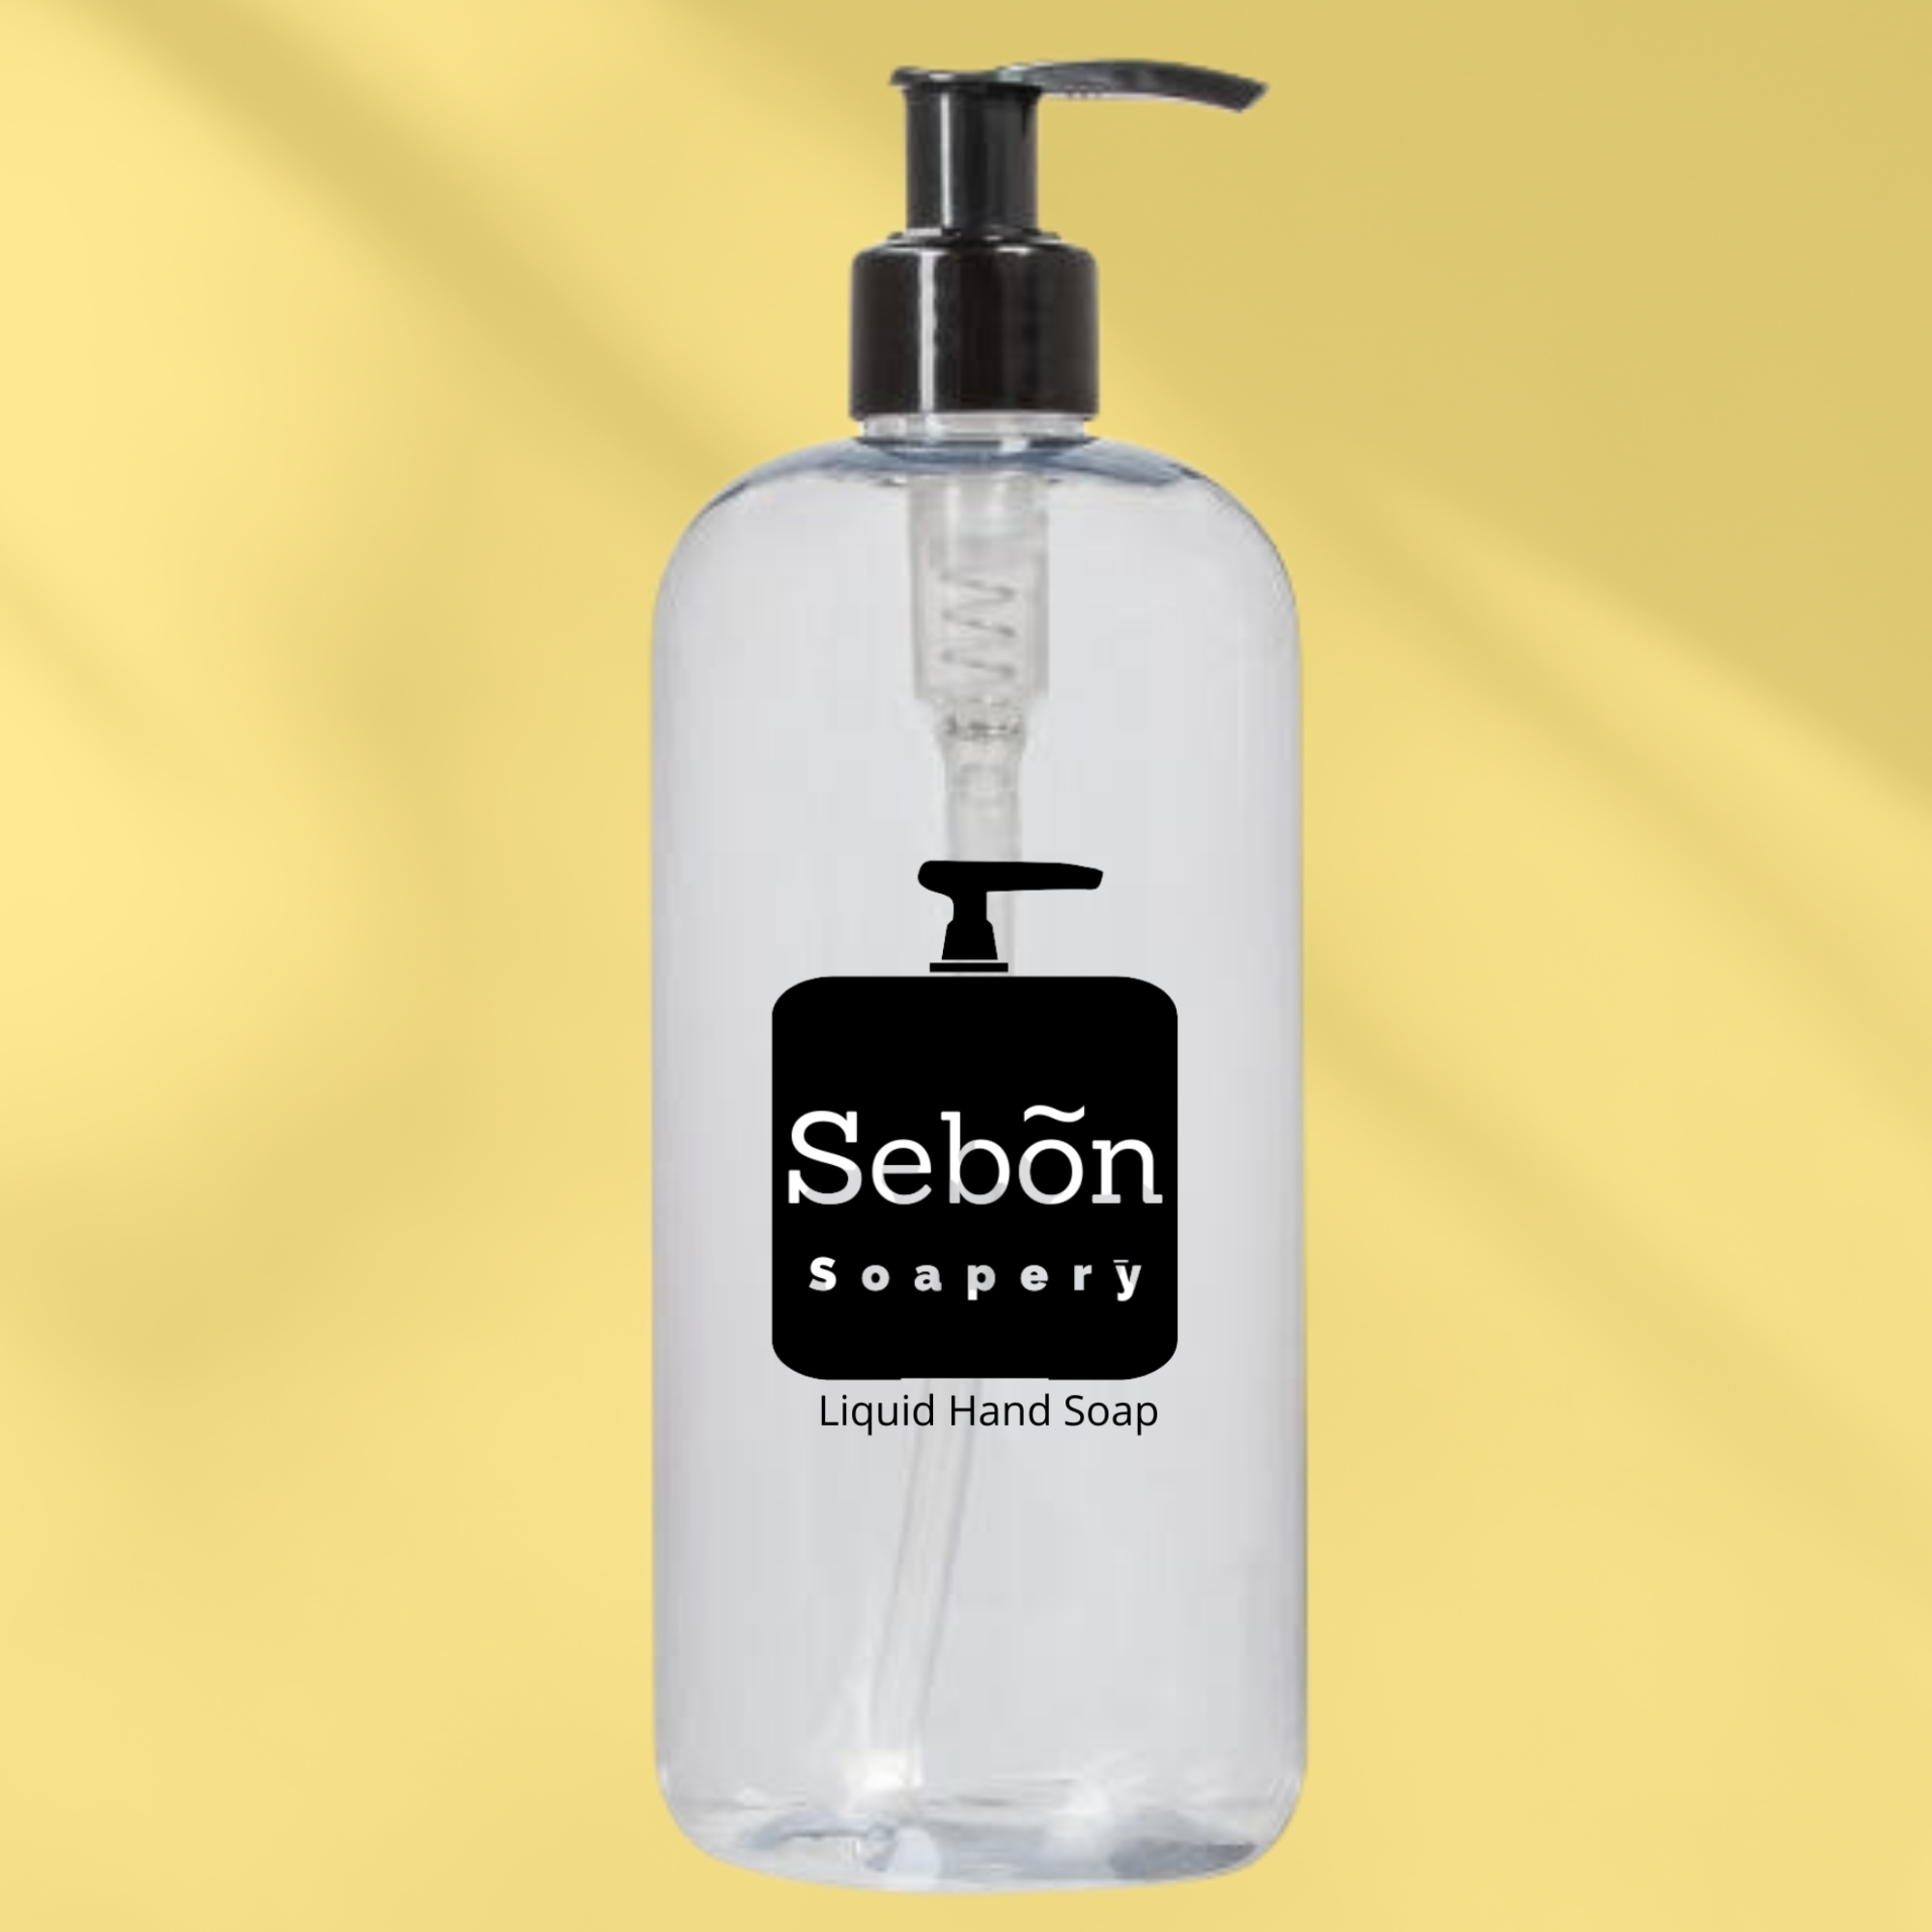 Sebon Blood Orange & Jasmine Scented Liquid Hand Soap with Olive Oil